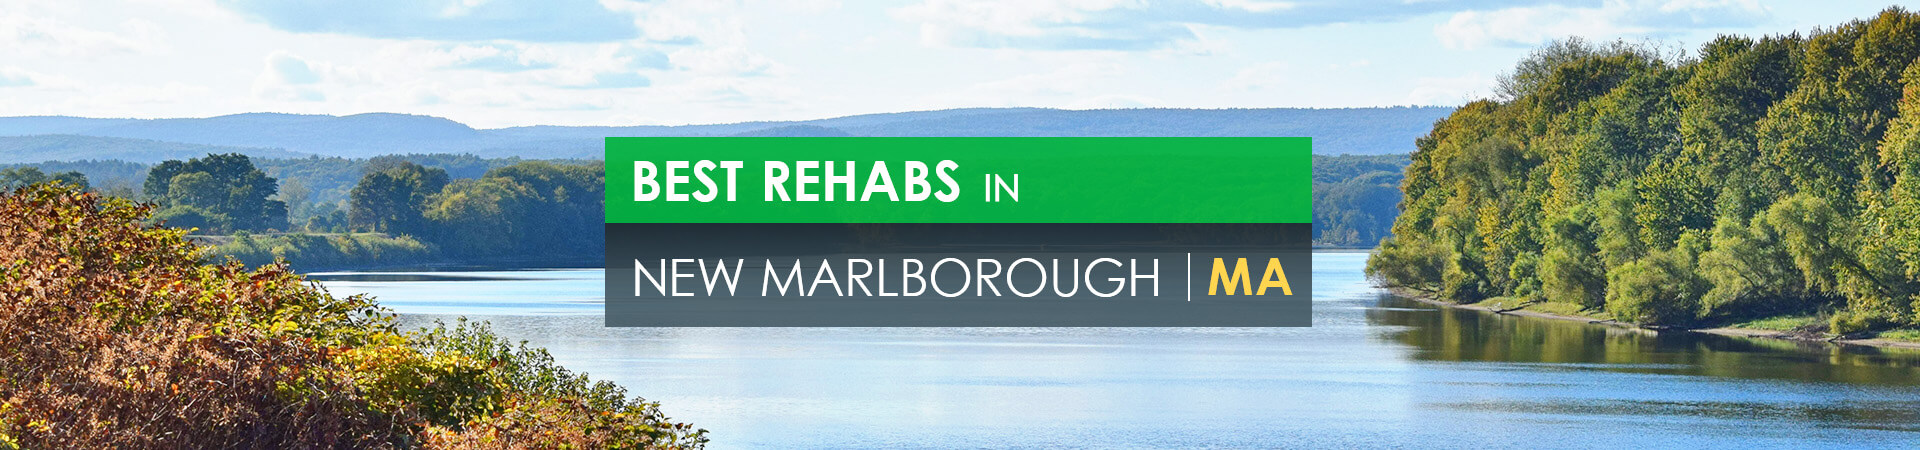 Best rehabs in New Marlborough, MA